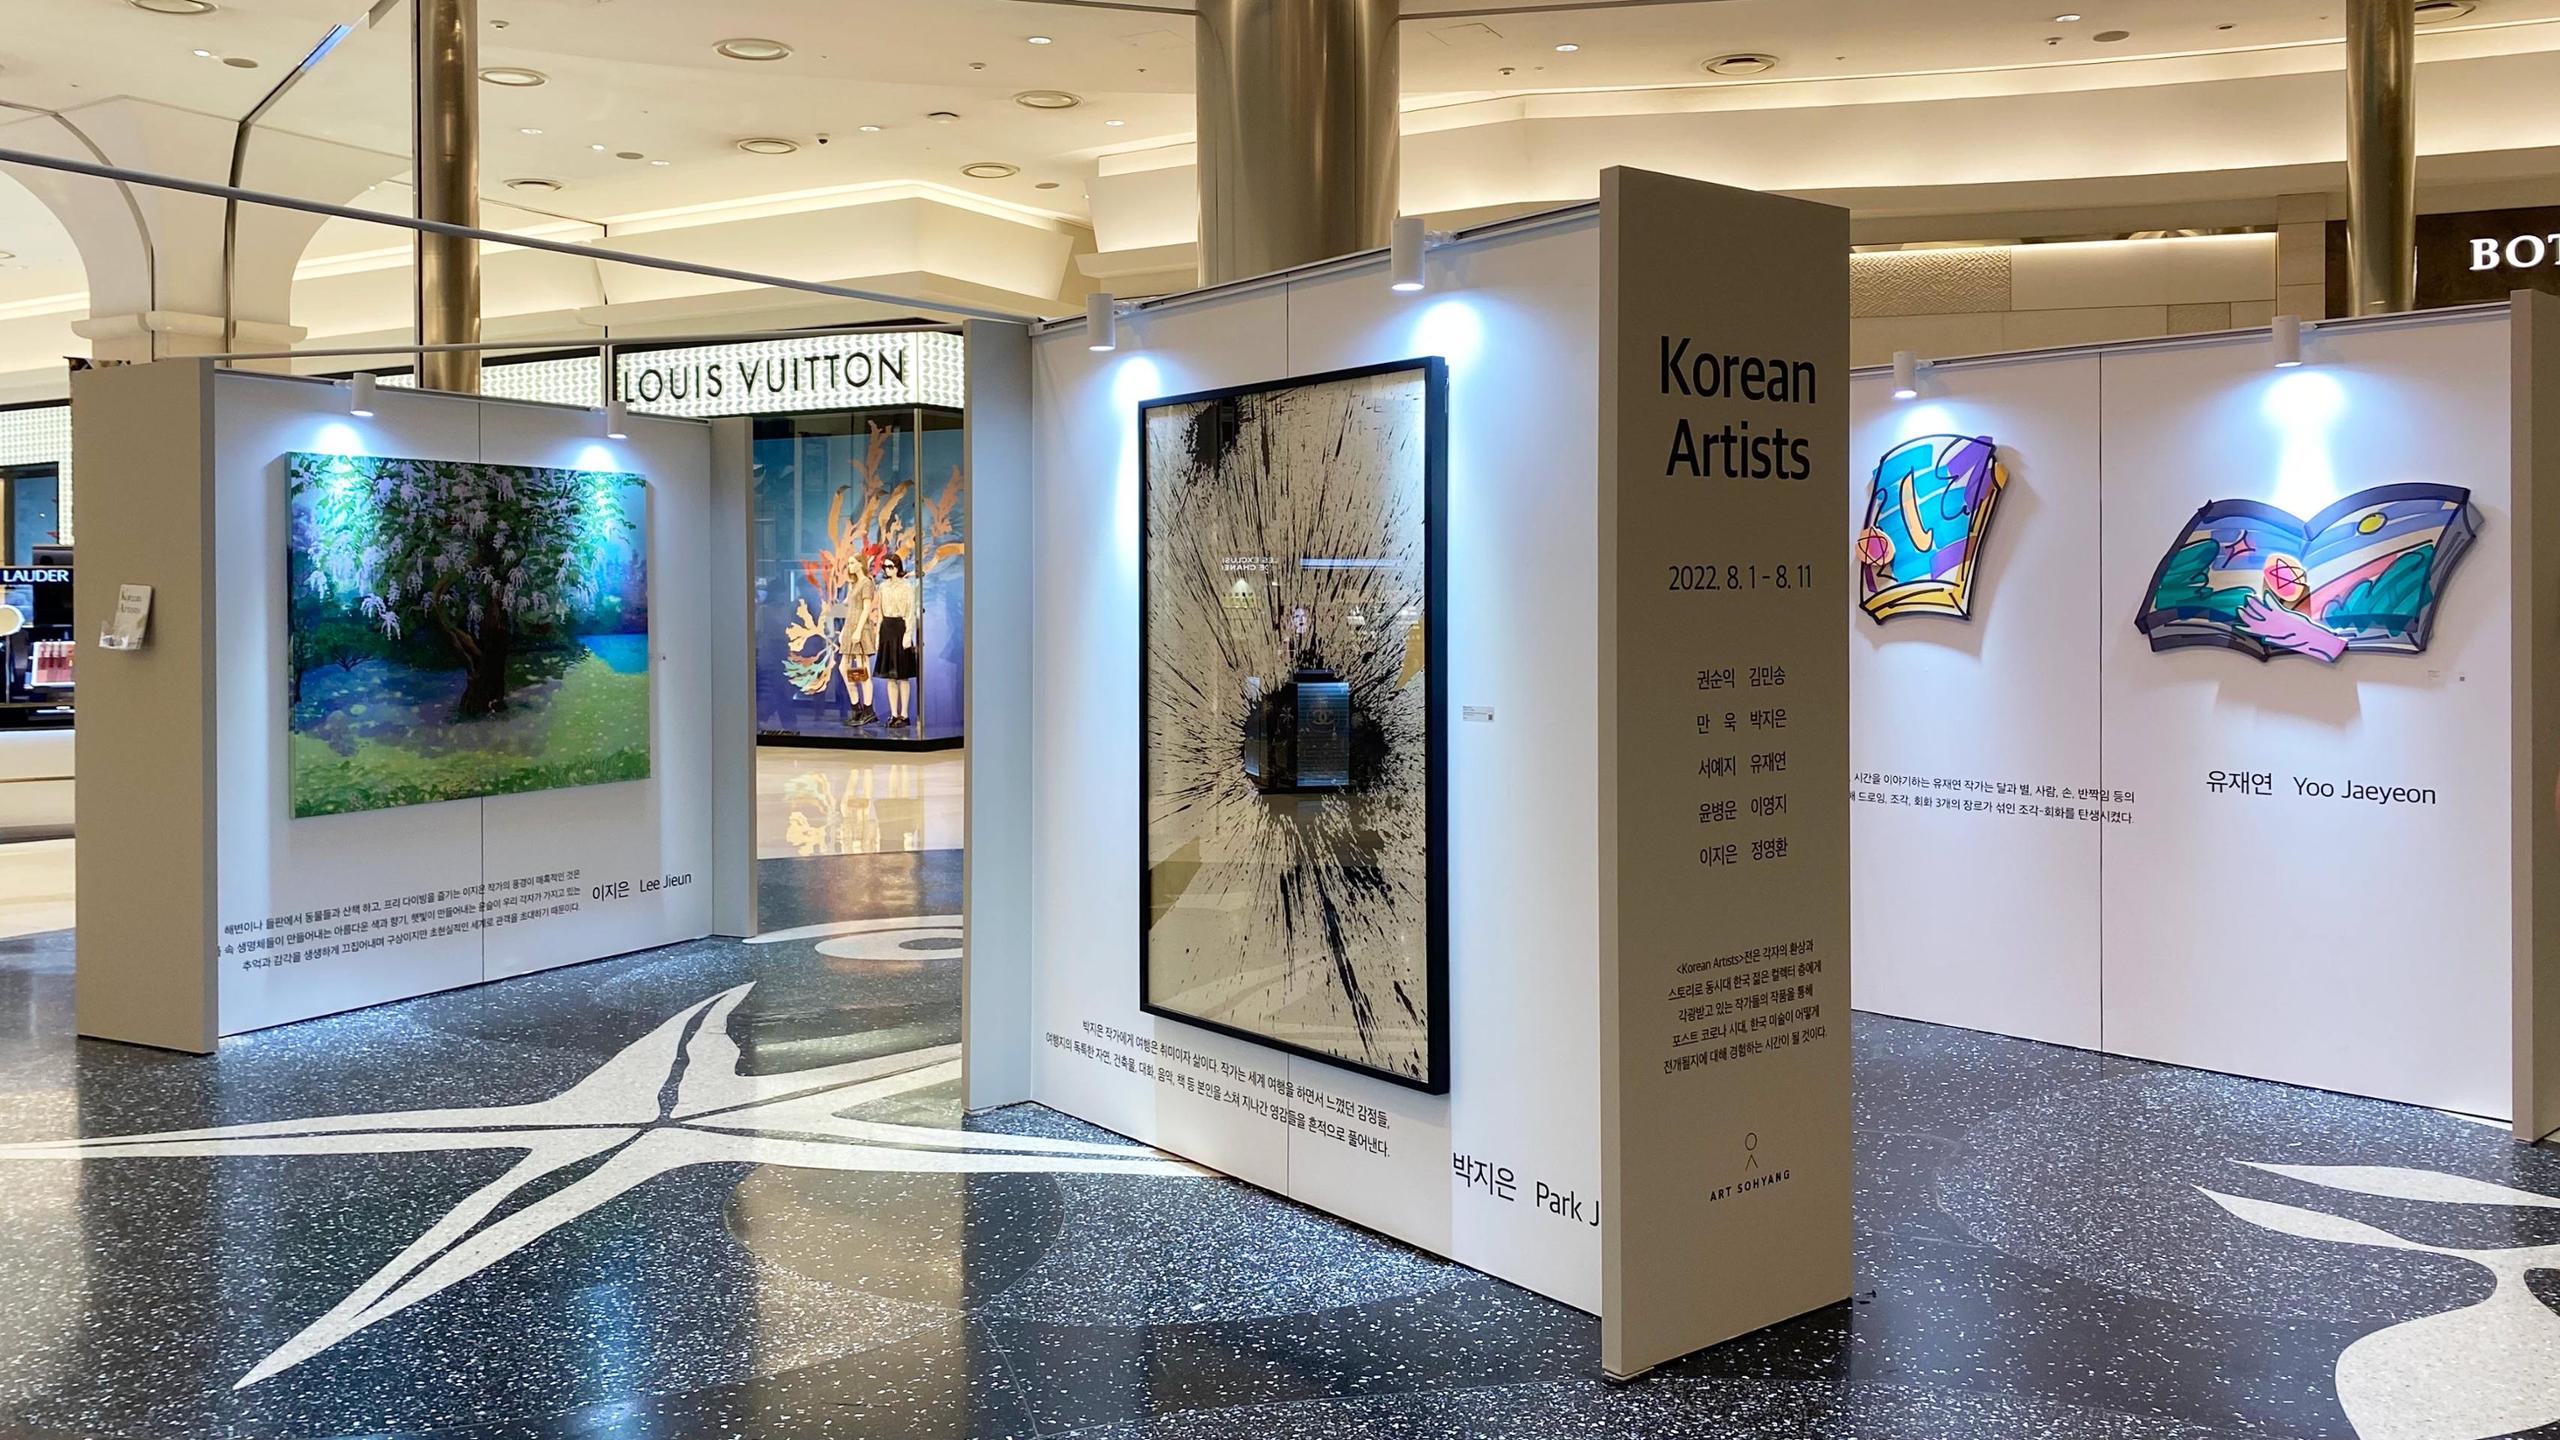 Korean Artists